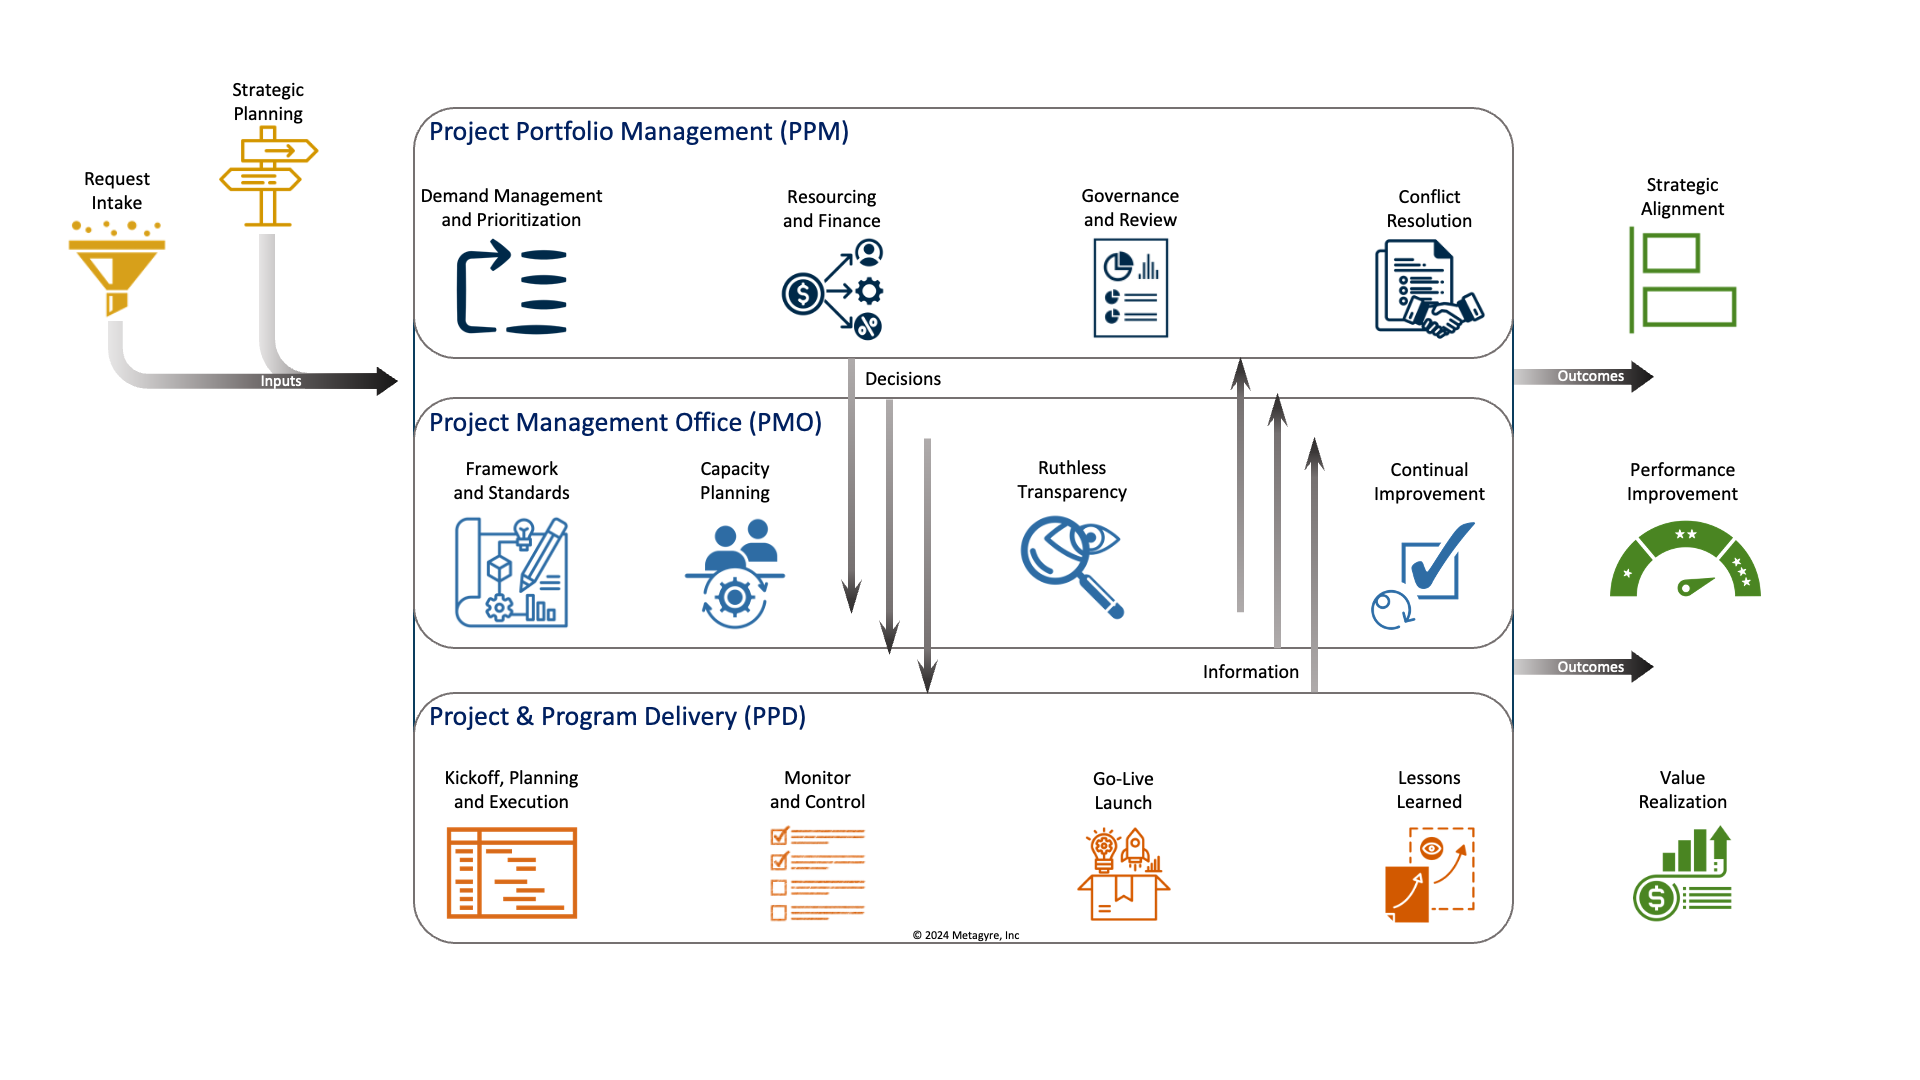 Project Portfolio Management Office (PPMO)